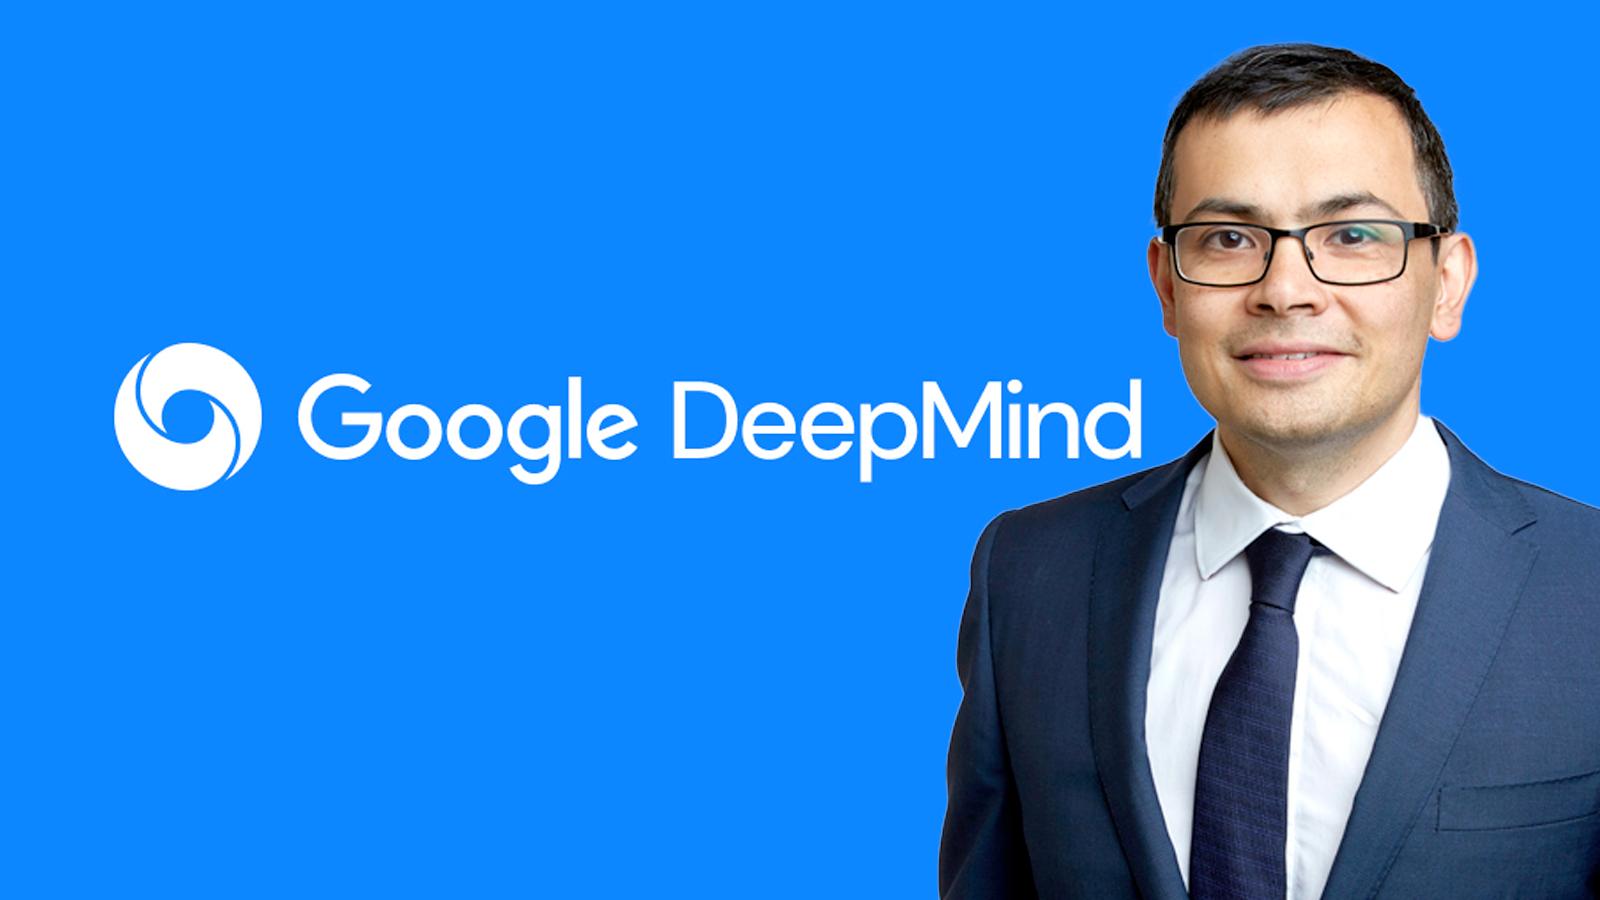 google deepmind logo with ceo